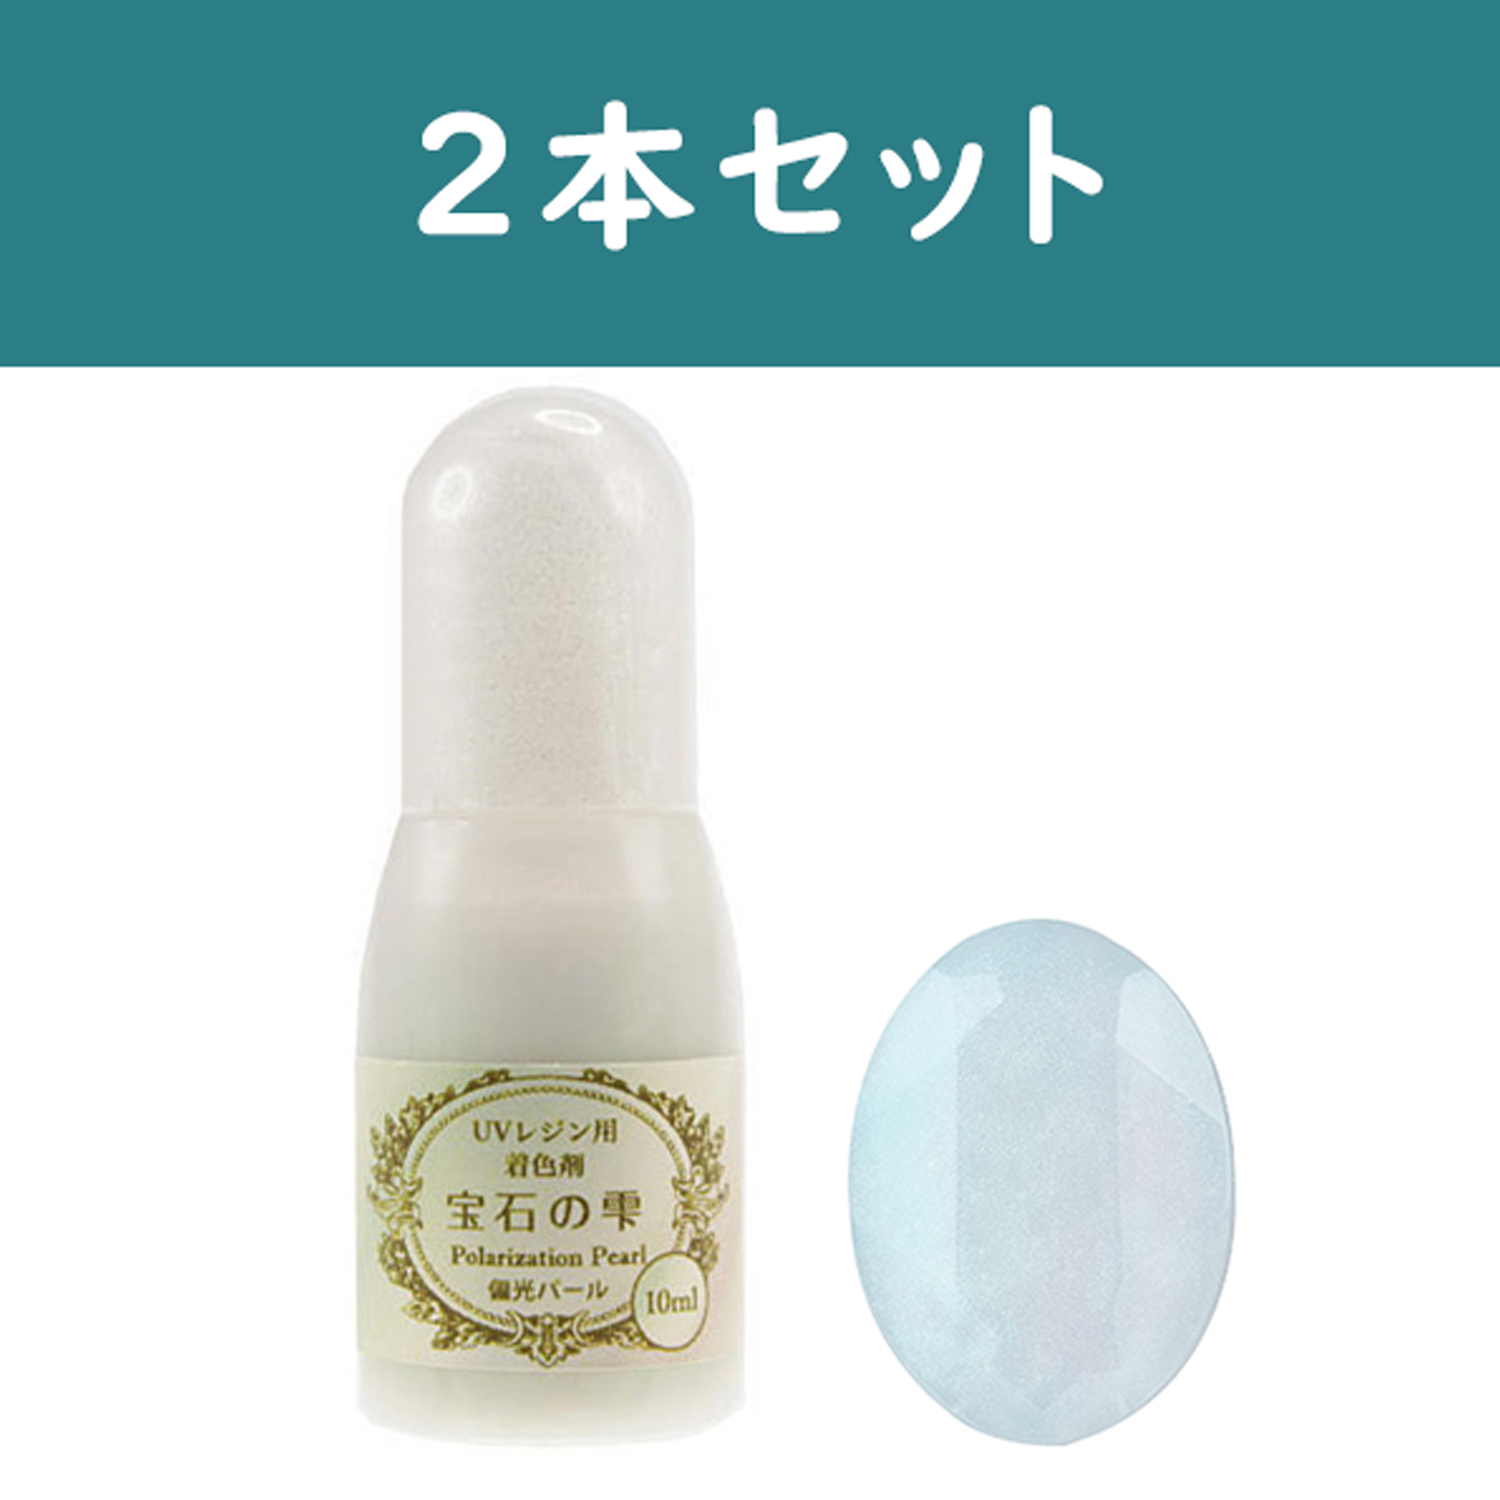 PDC Hoseki no Shizuku (Jewel Drop) Resin Dye/Pigment Fluorescent Colors 2set (set)